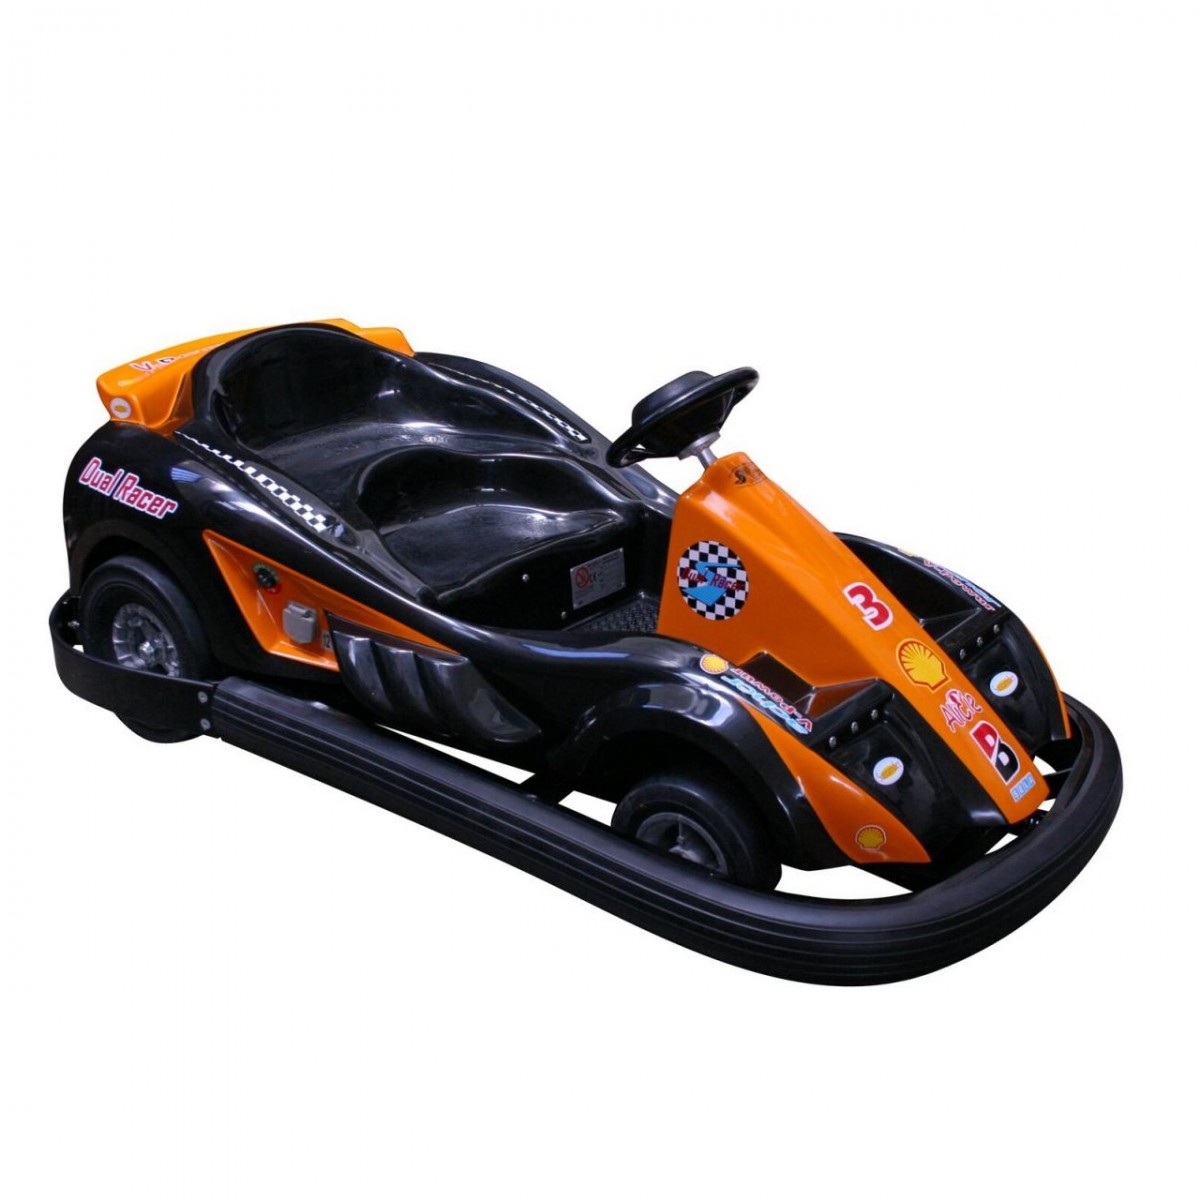 Baby Kart Double Black Orange